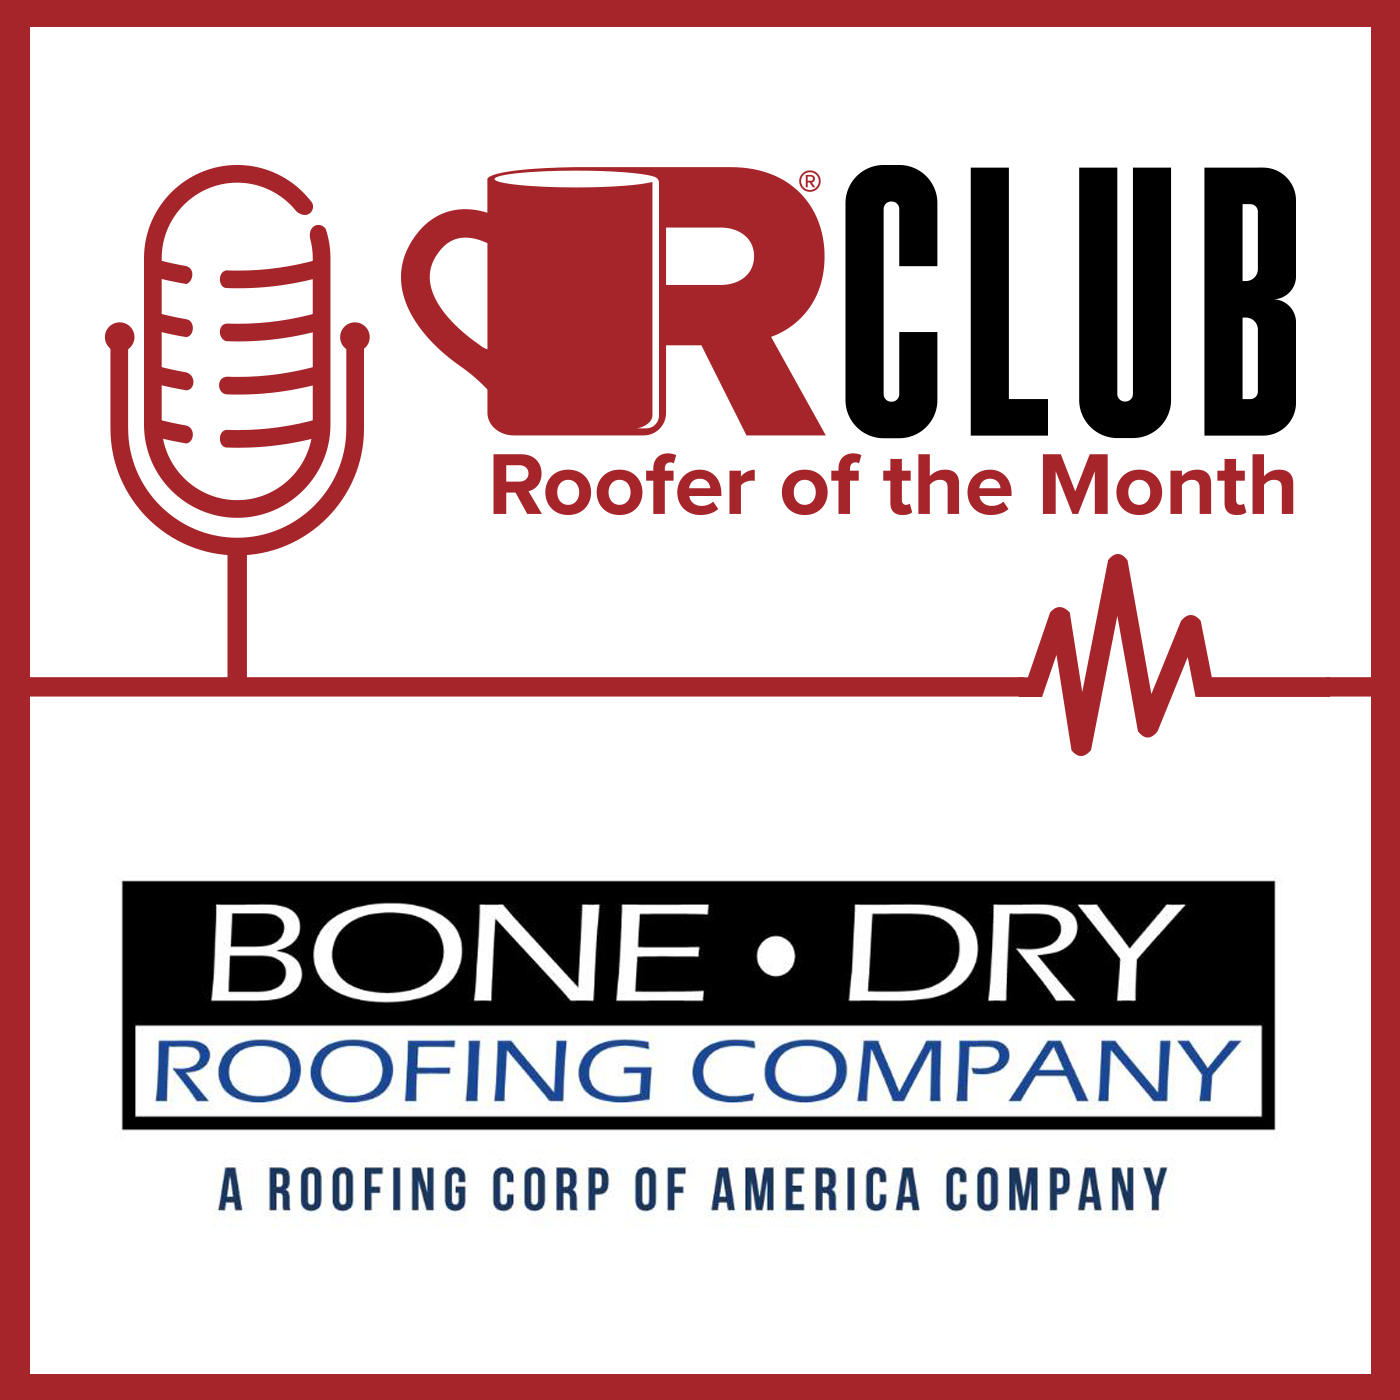 Bone Dry Roofing Company